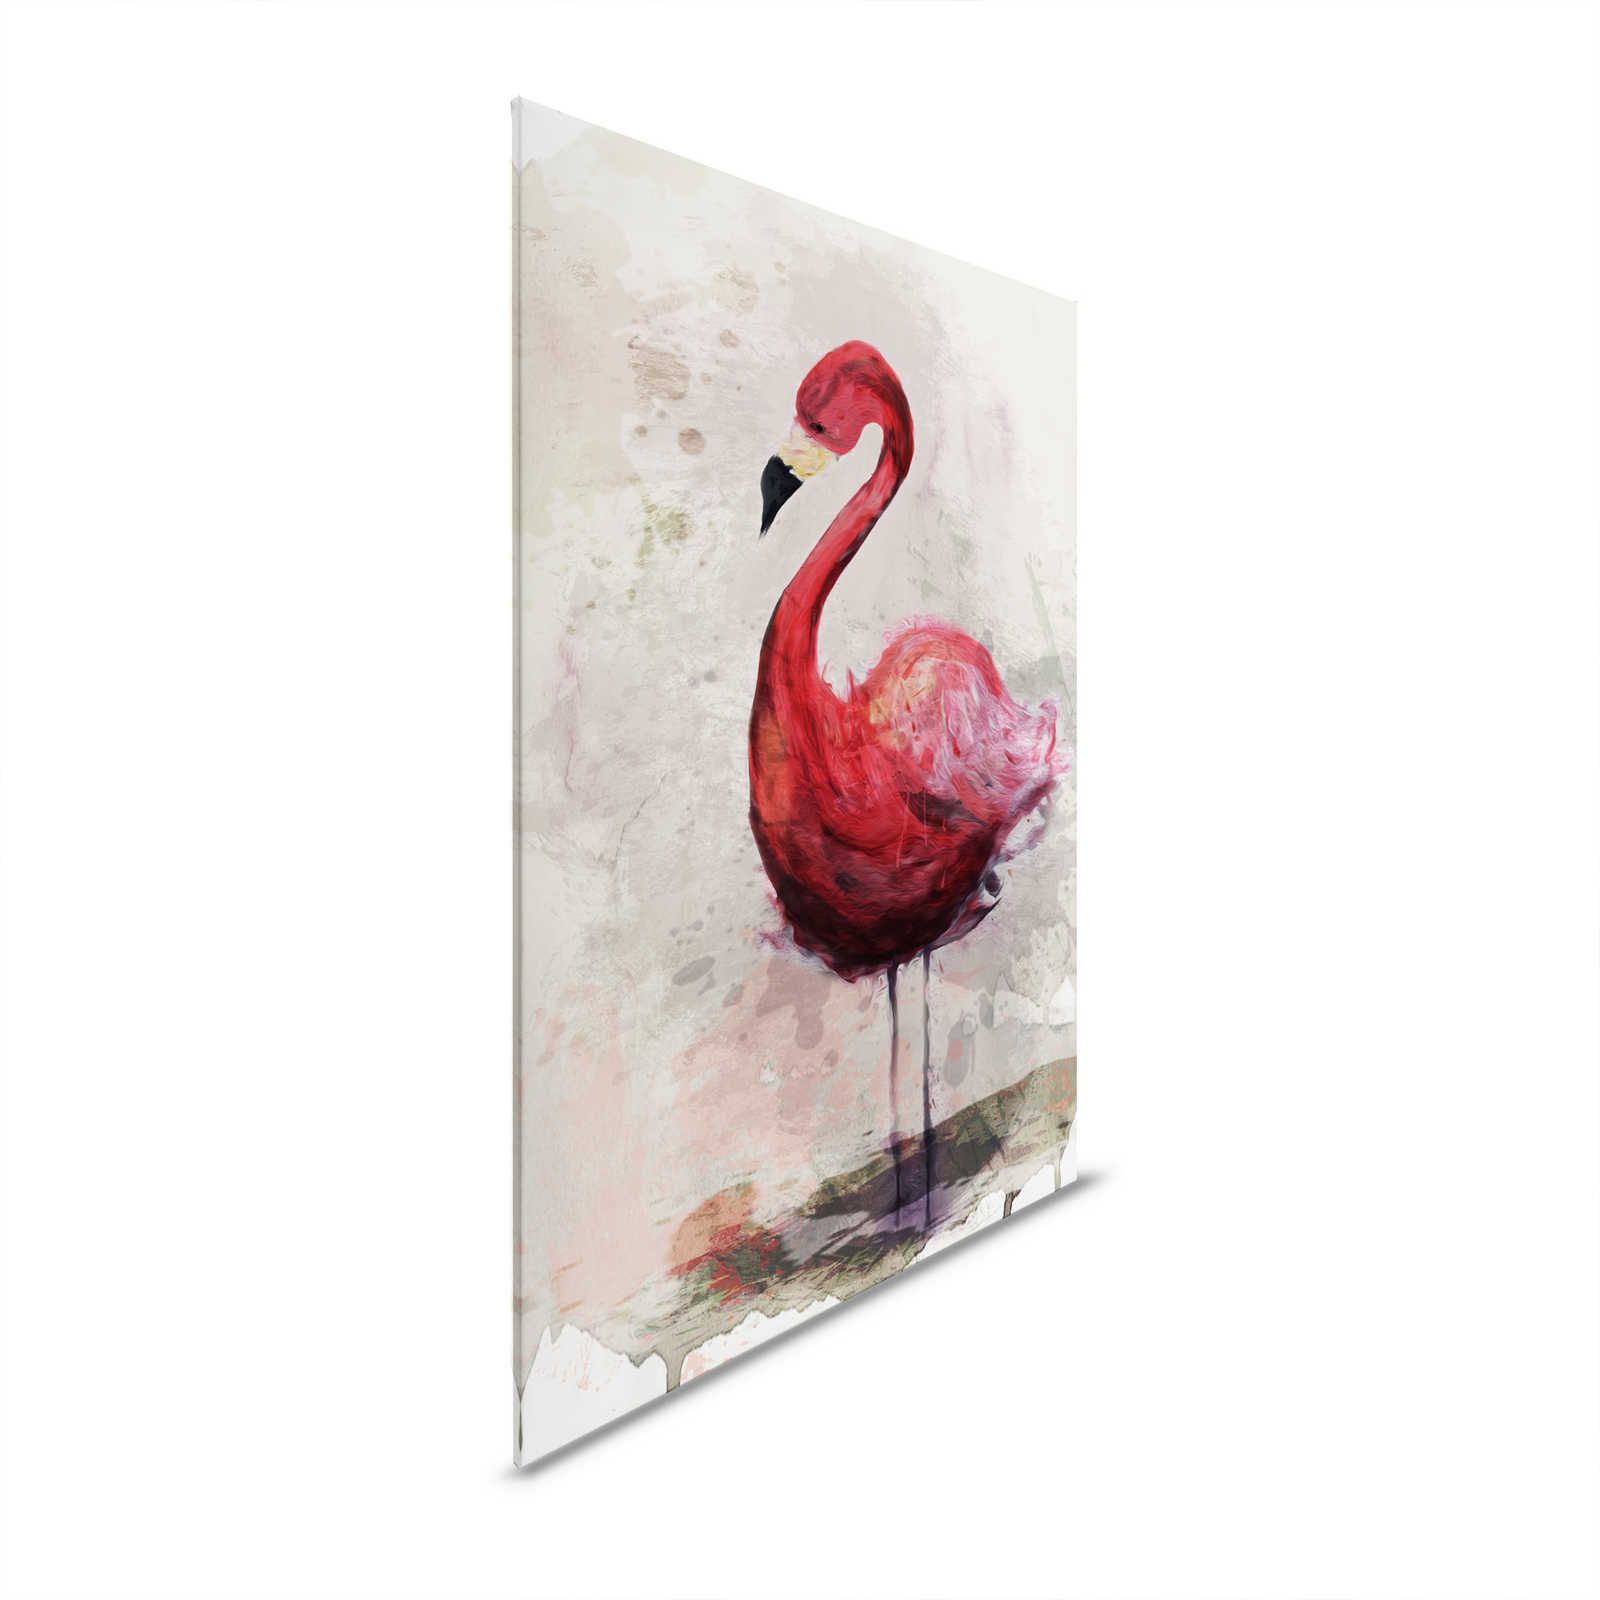         Aquarelles Leinwandbild mit Flamingo Motiv im Zeichenstil – 1,20 m x 0,80 m
    